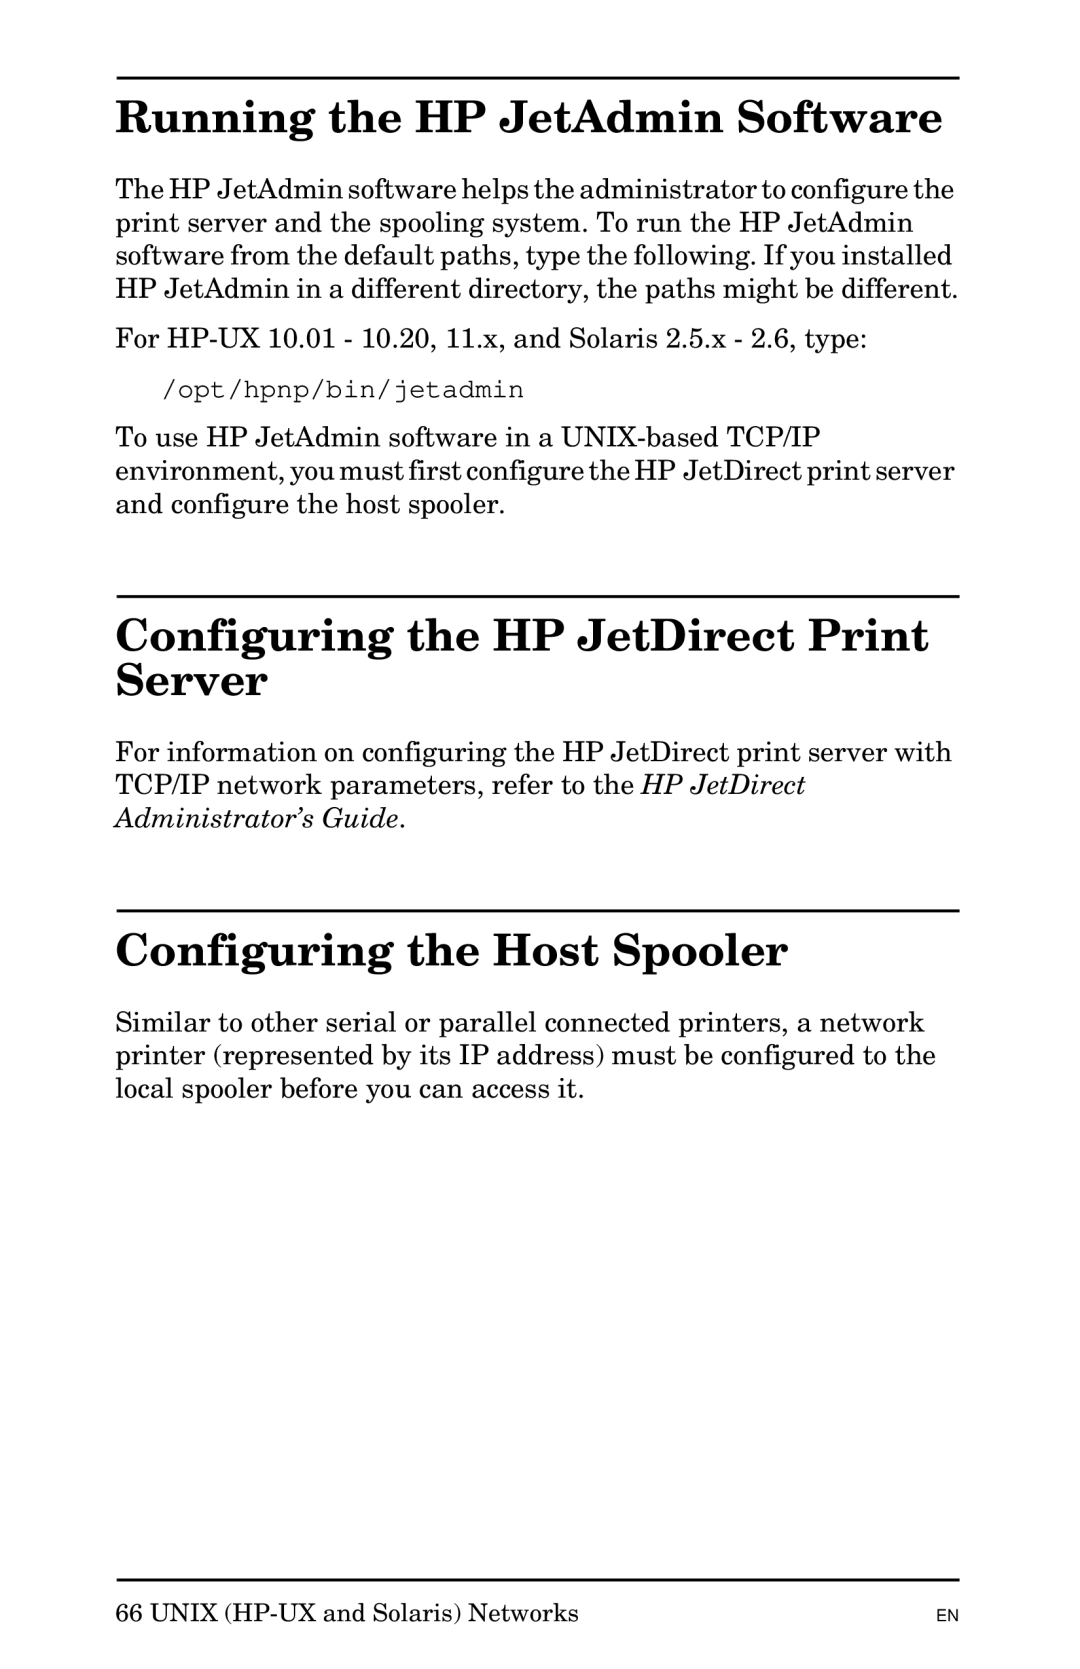 HP Jetadmin Software for OS/2 manual Running the HP JetAdmin Software, Configuring the HP JetDirect Print Server 